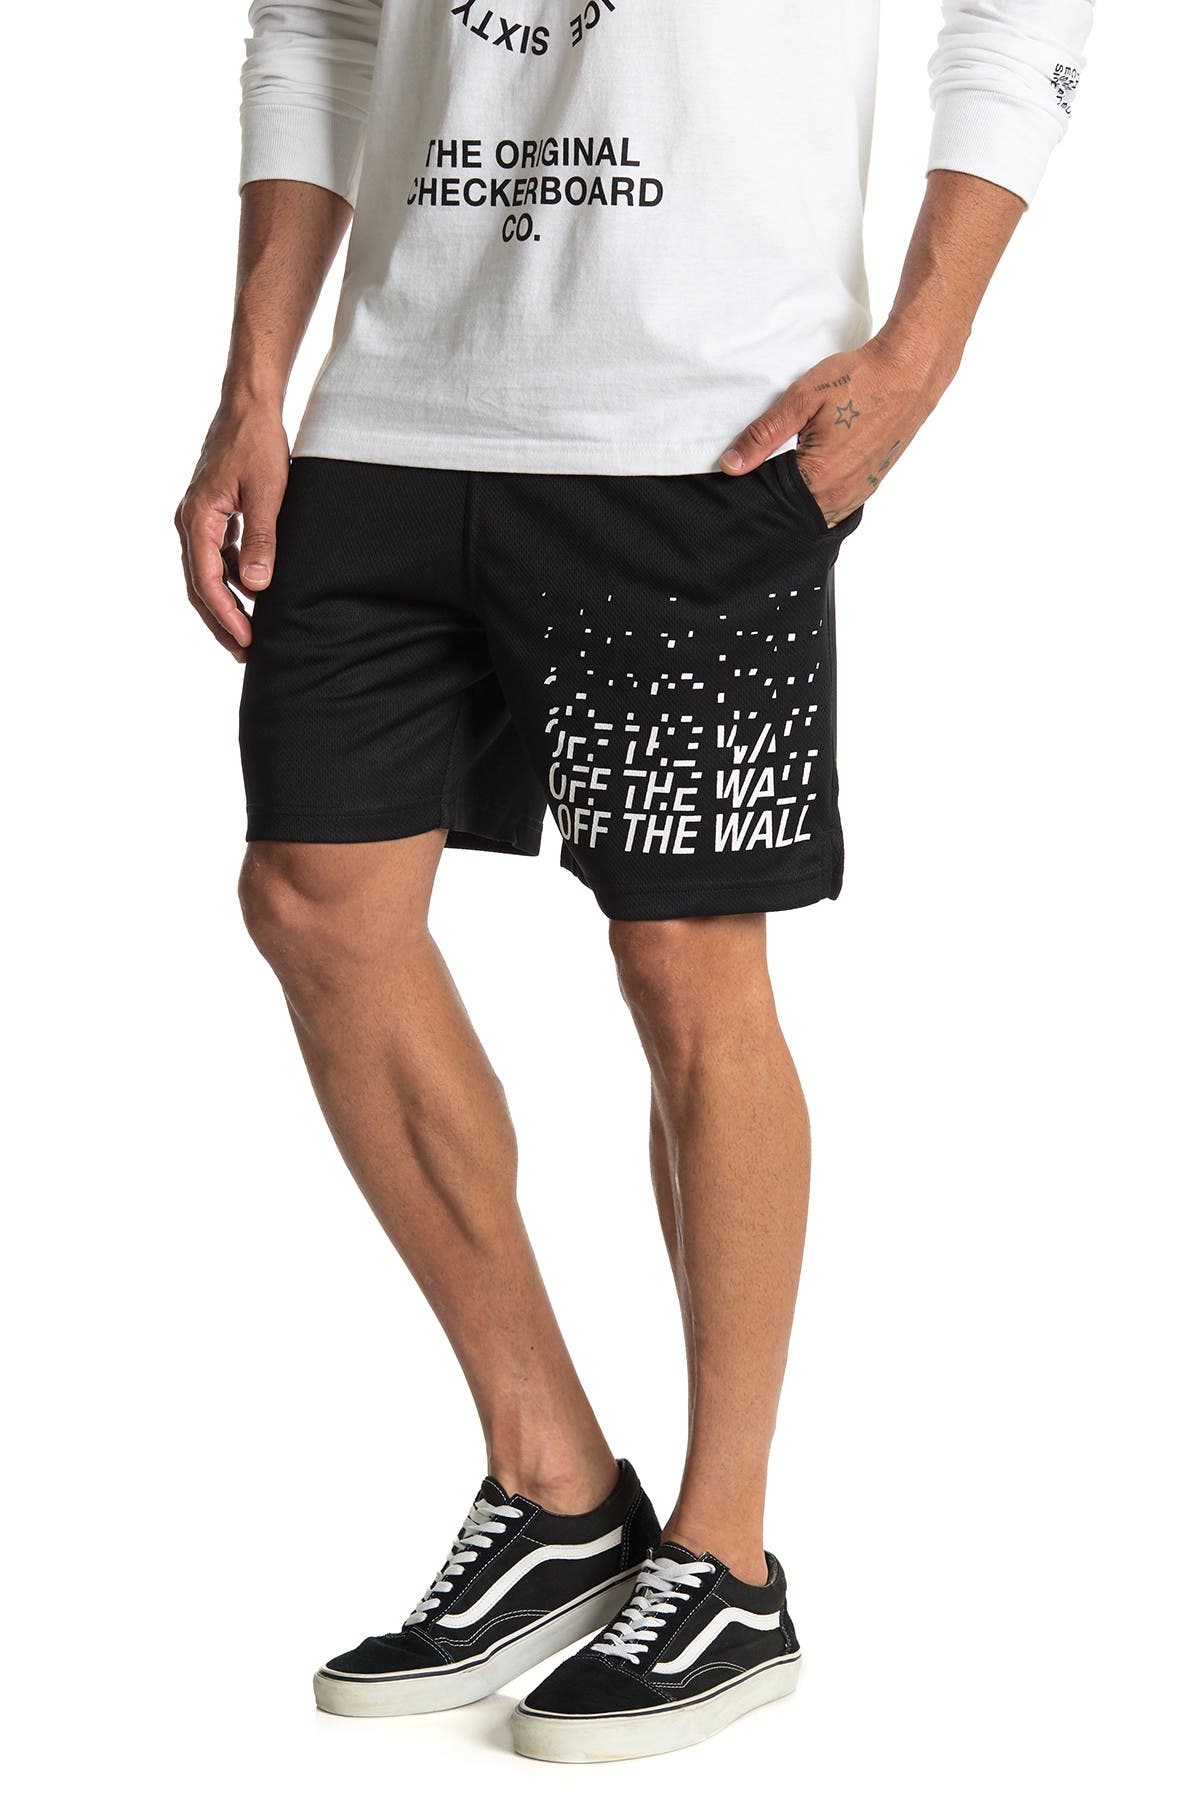 vans gym shorts